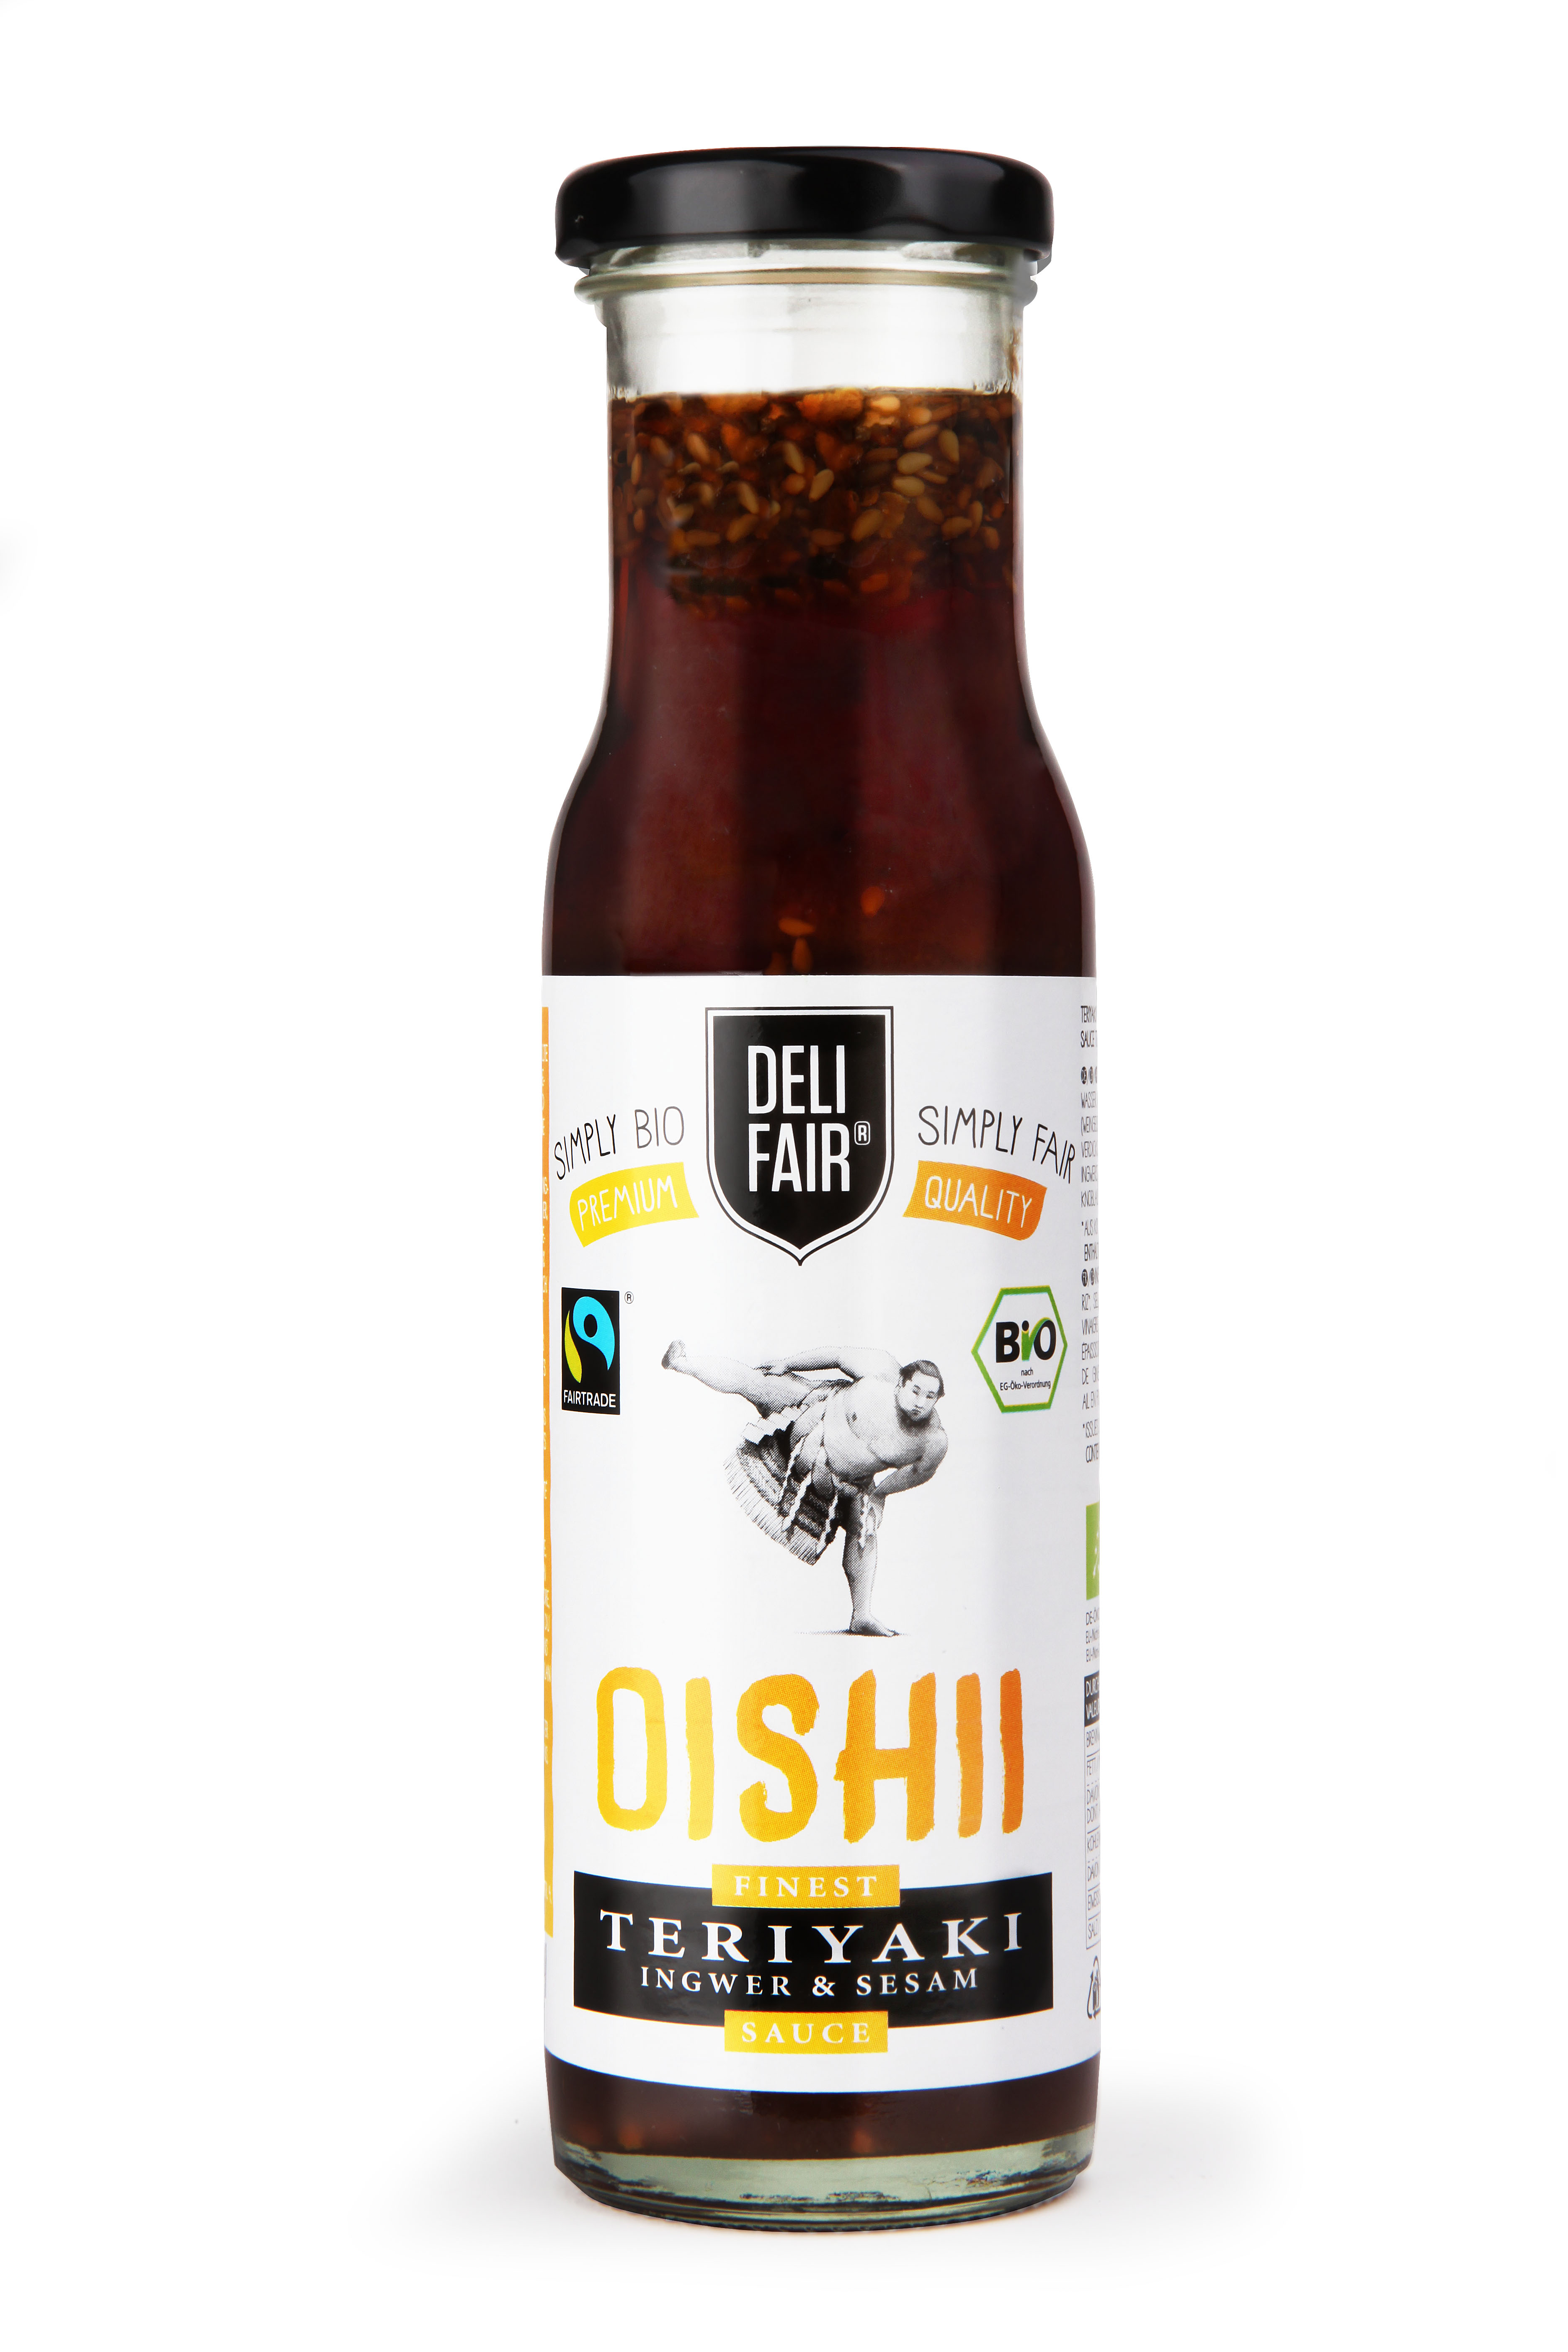 Oishii Finest Teriyaki Ingwer & Sesam Sauce